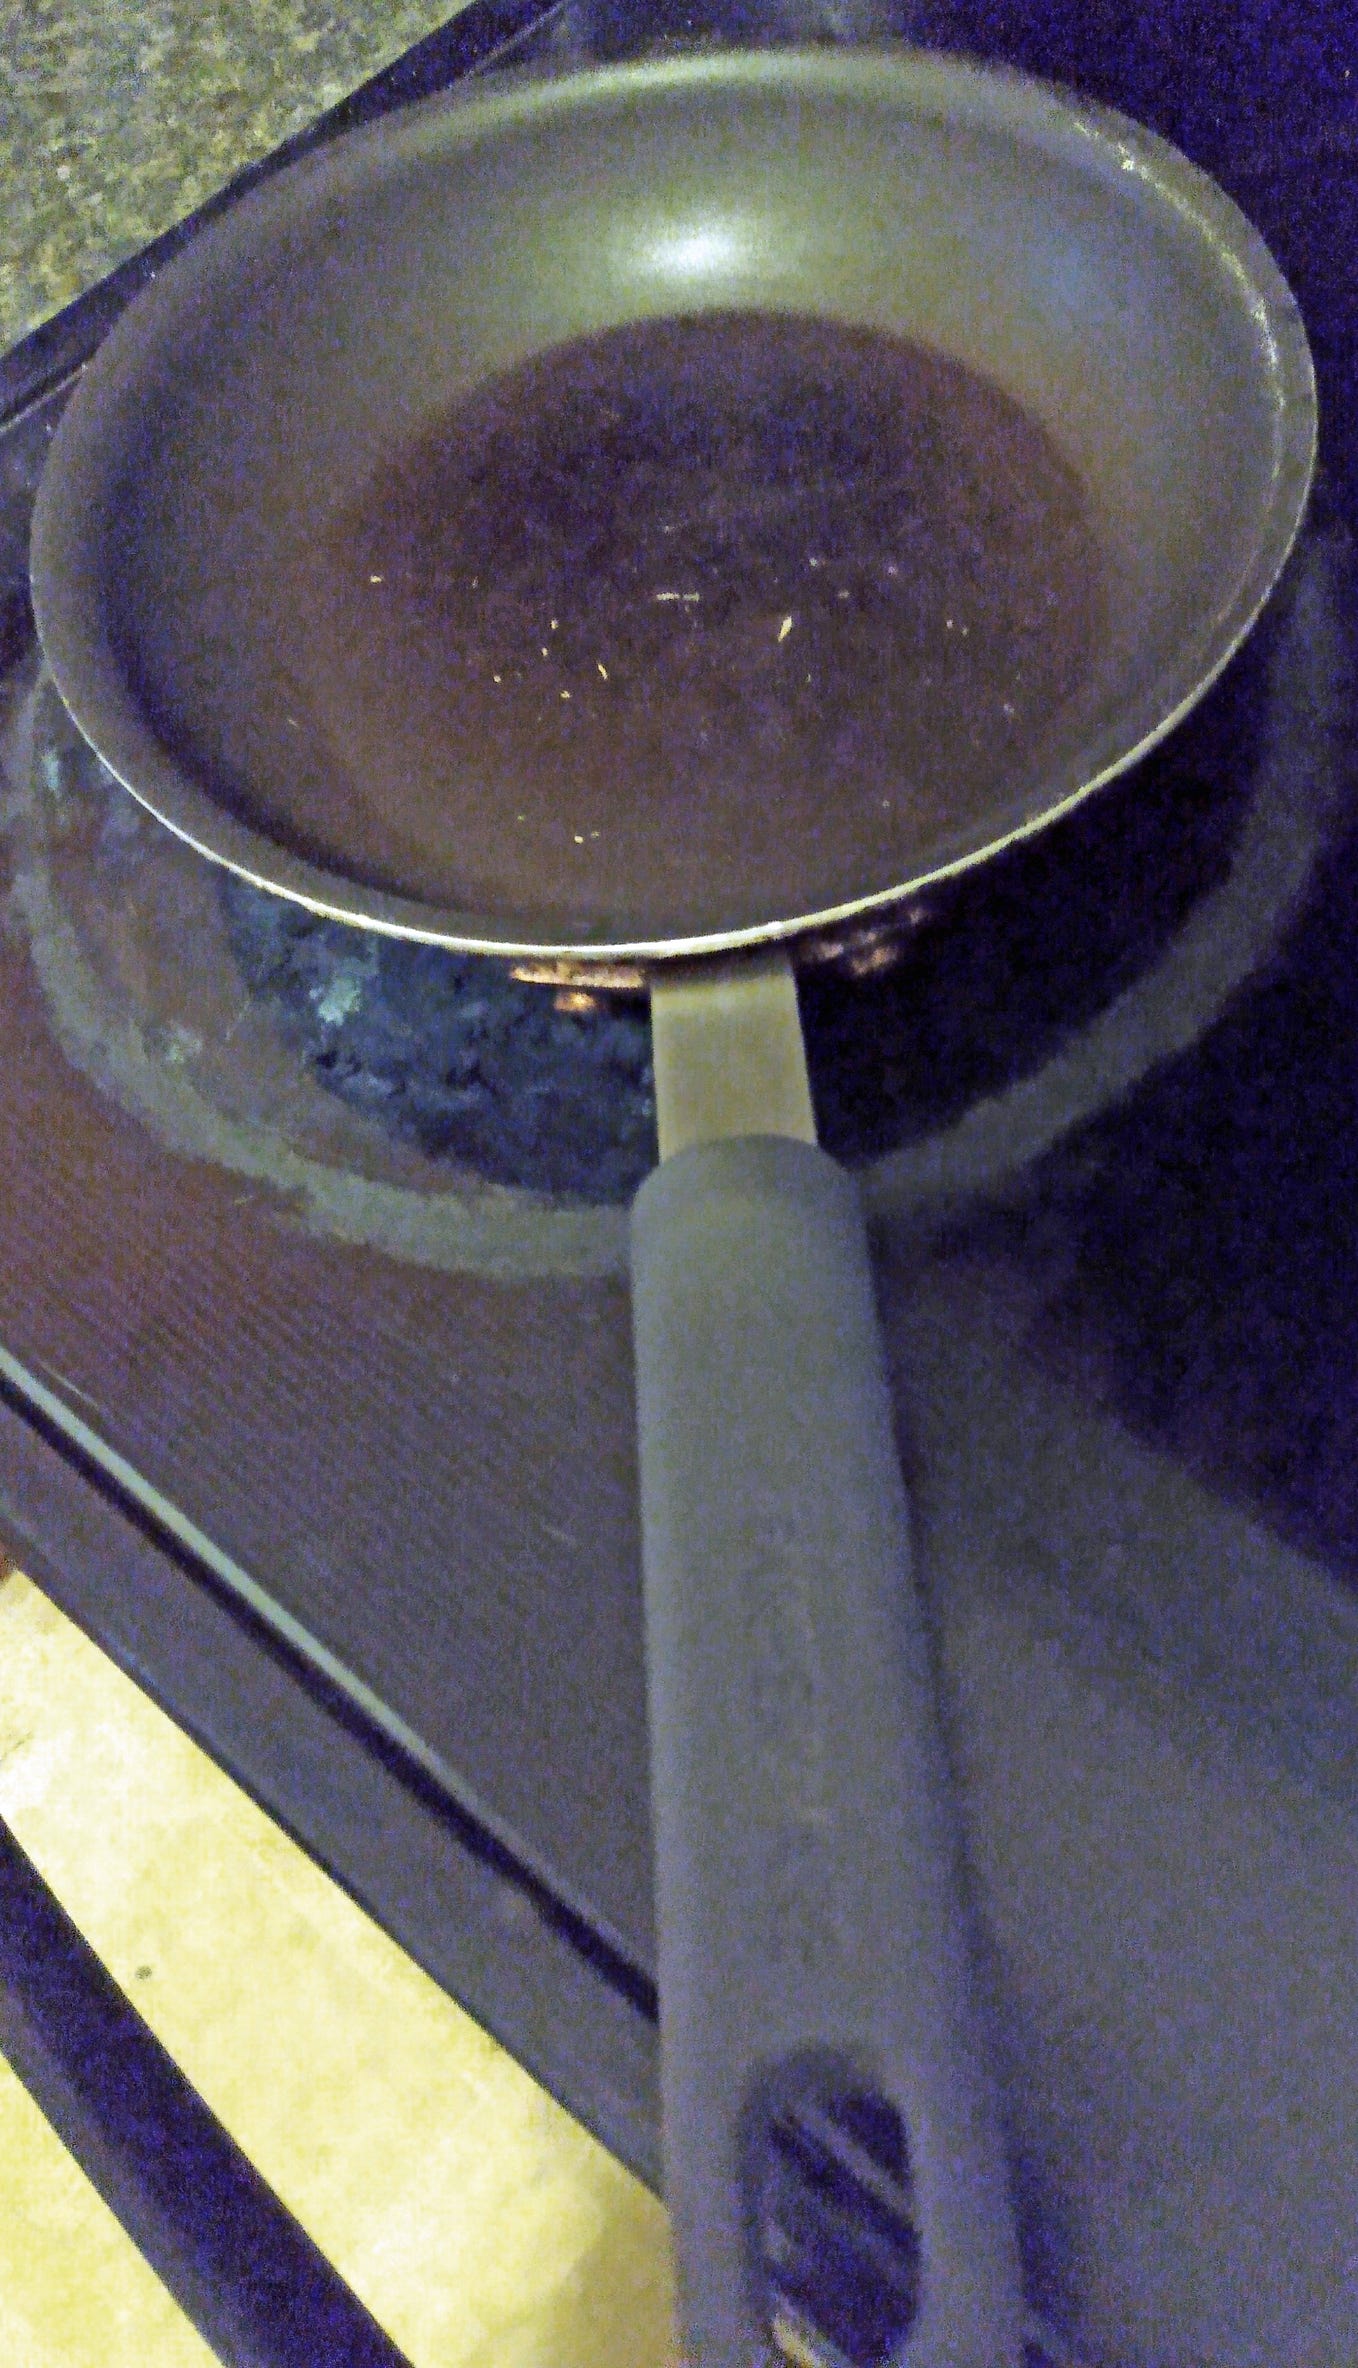 I Love My Frying Pan!